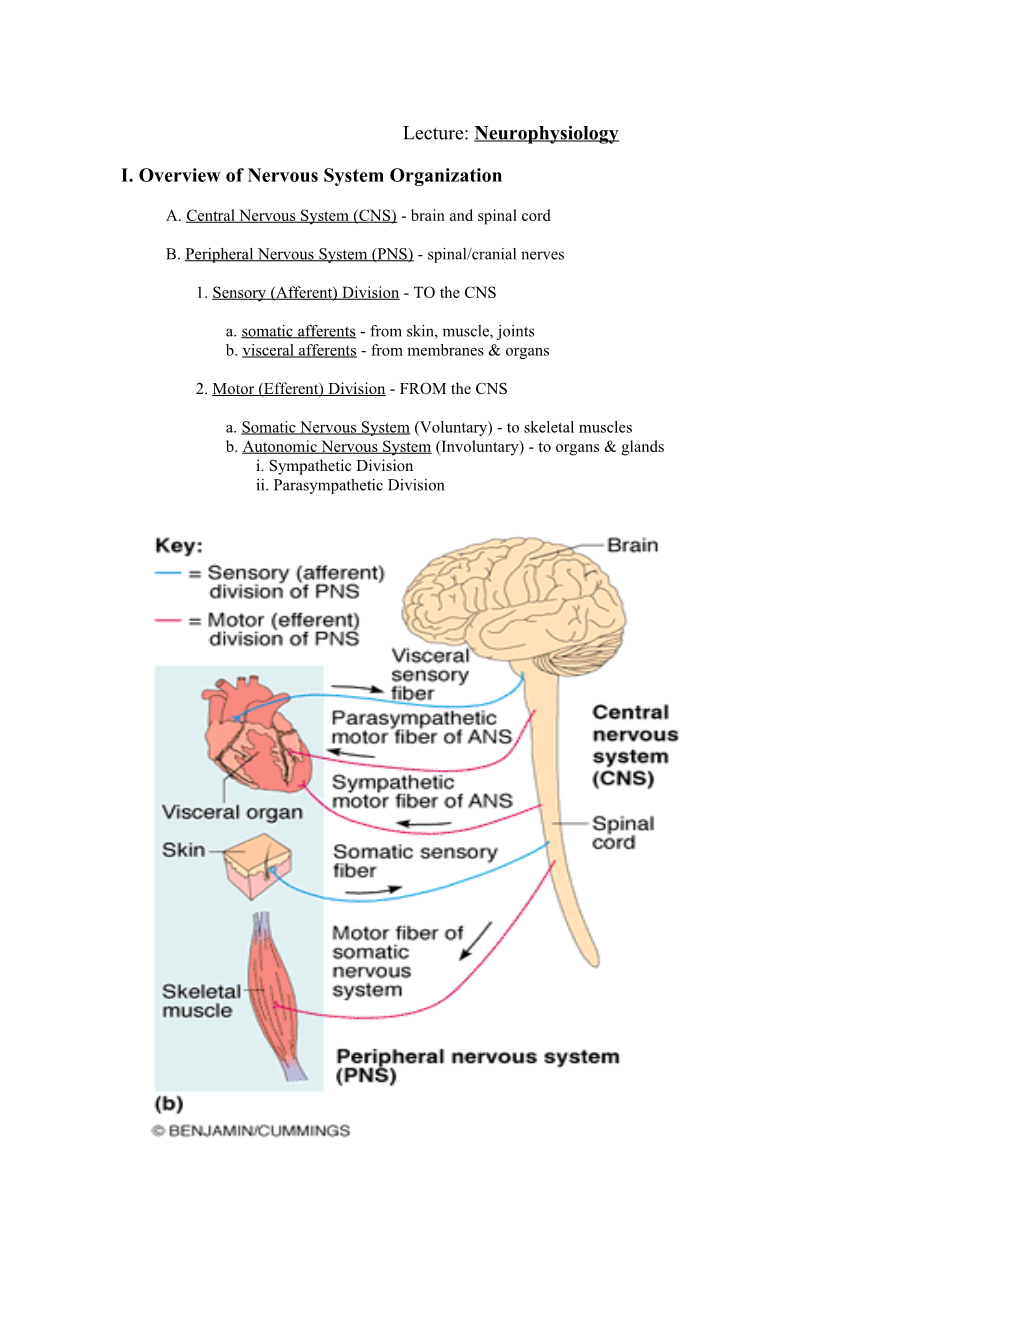 I. Overview of Nervous System Organization